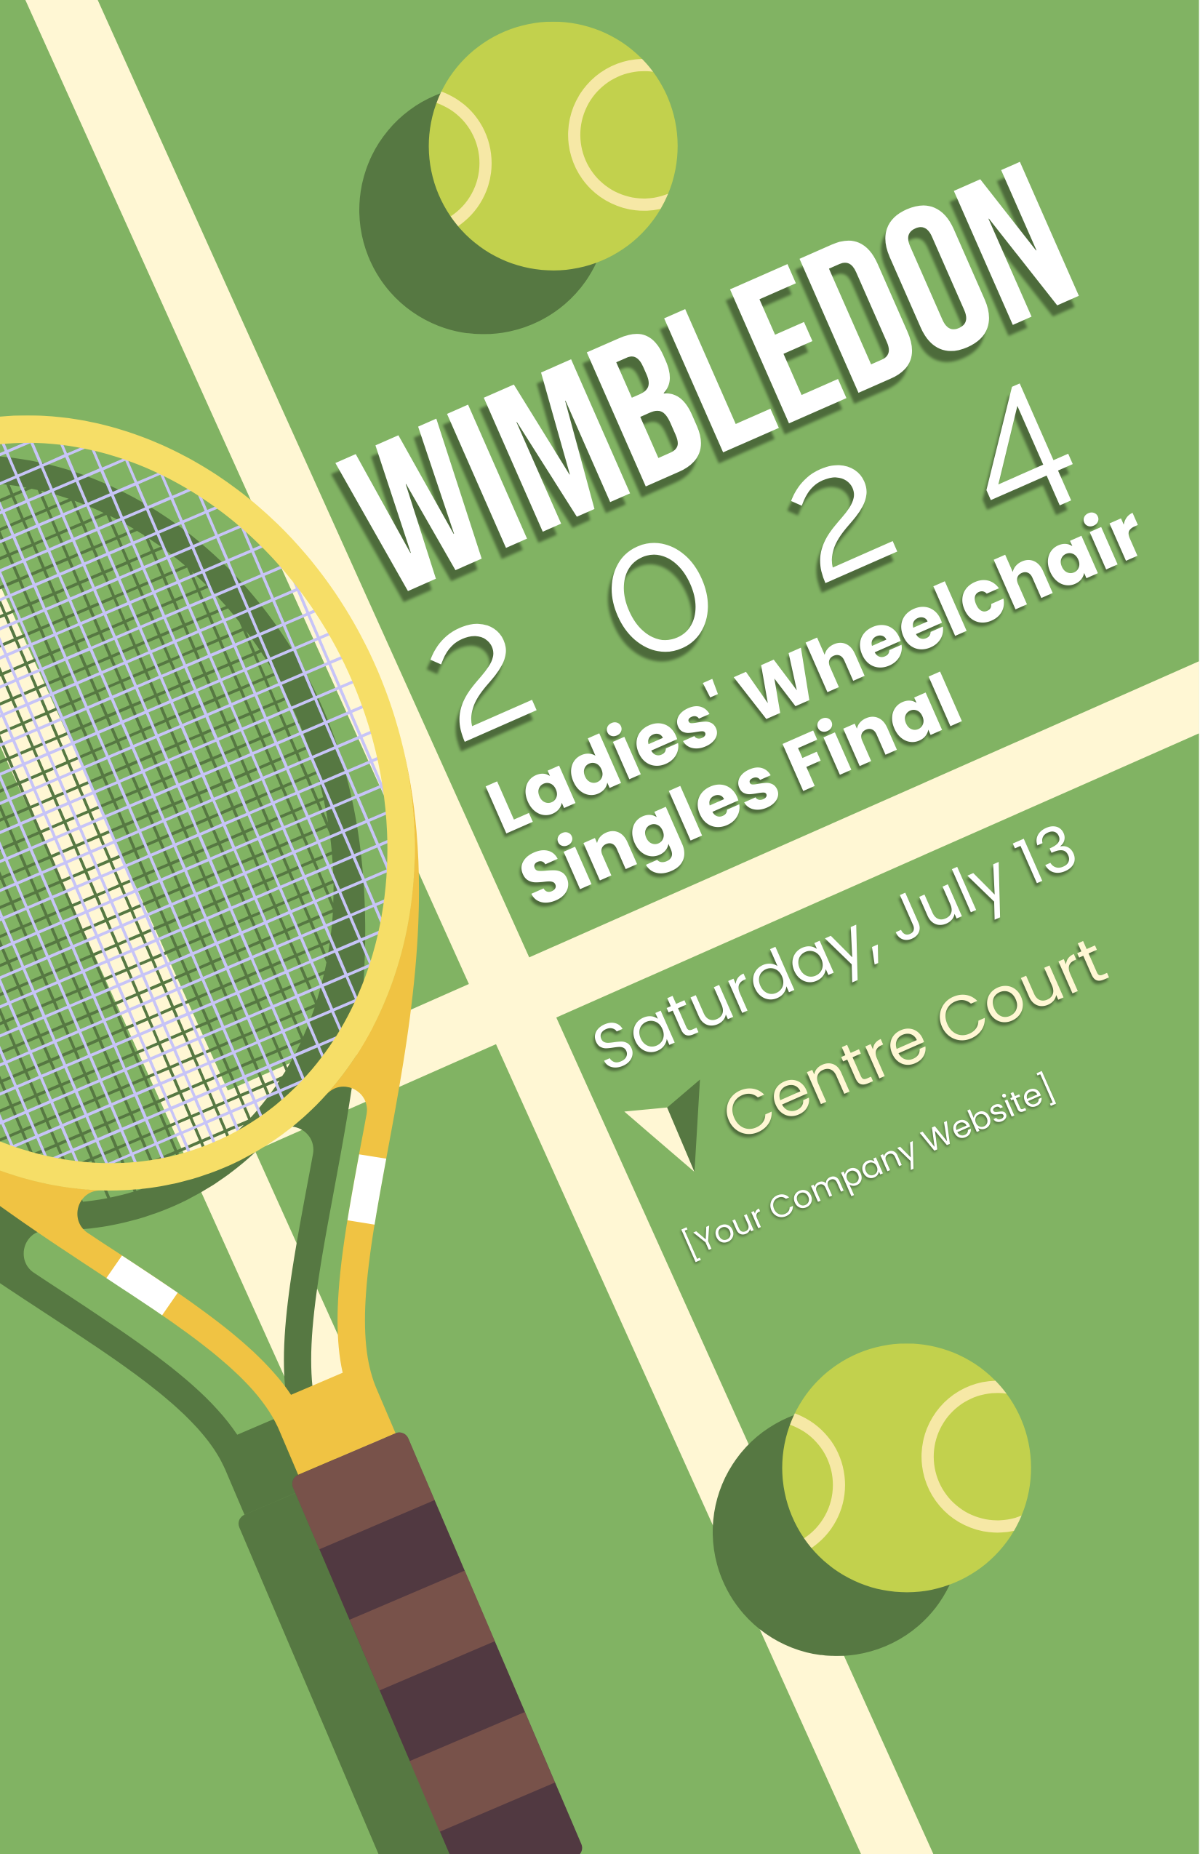 Wimbledon Ladies' Wheelchair Singles Final